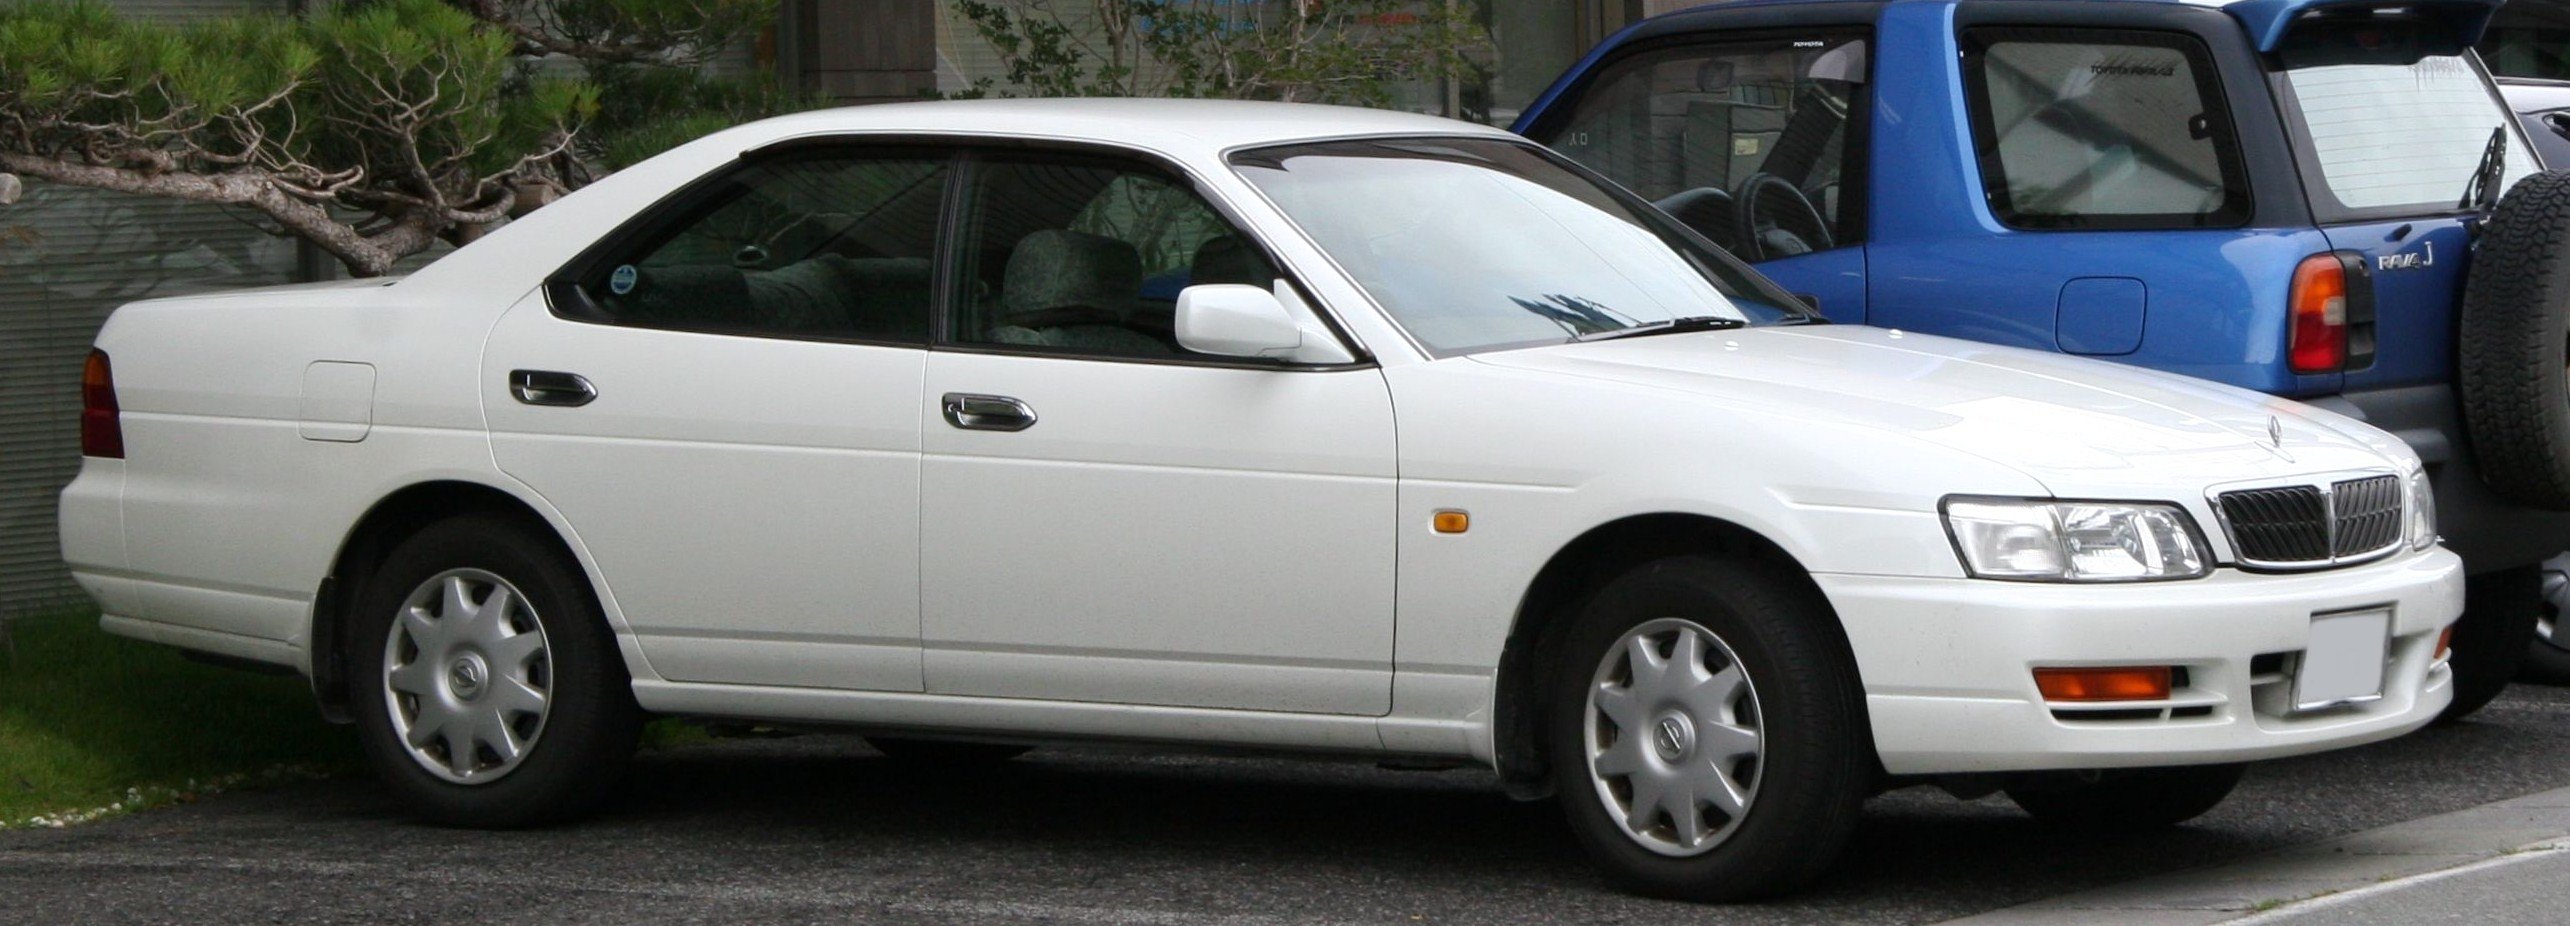 Nissan Laurel exterior - Side Profile